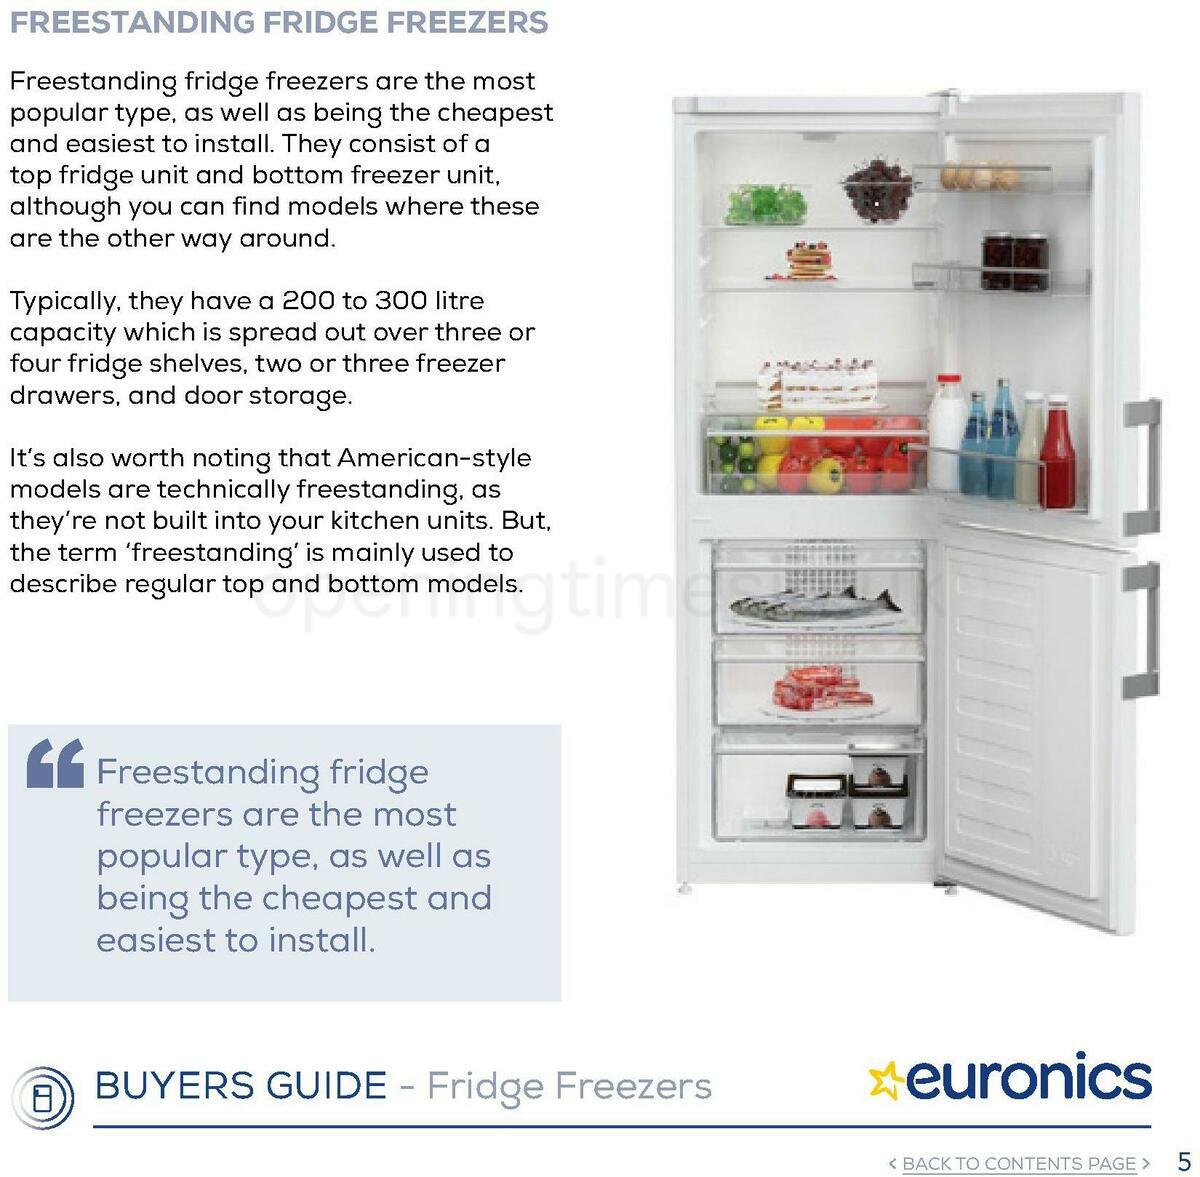 Euronics Fridge Freezers Buyers Guide Offers from 1 January